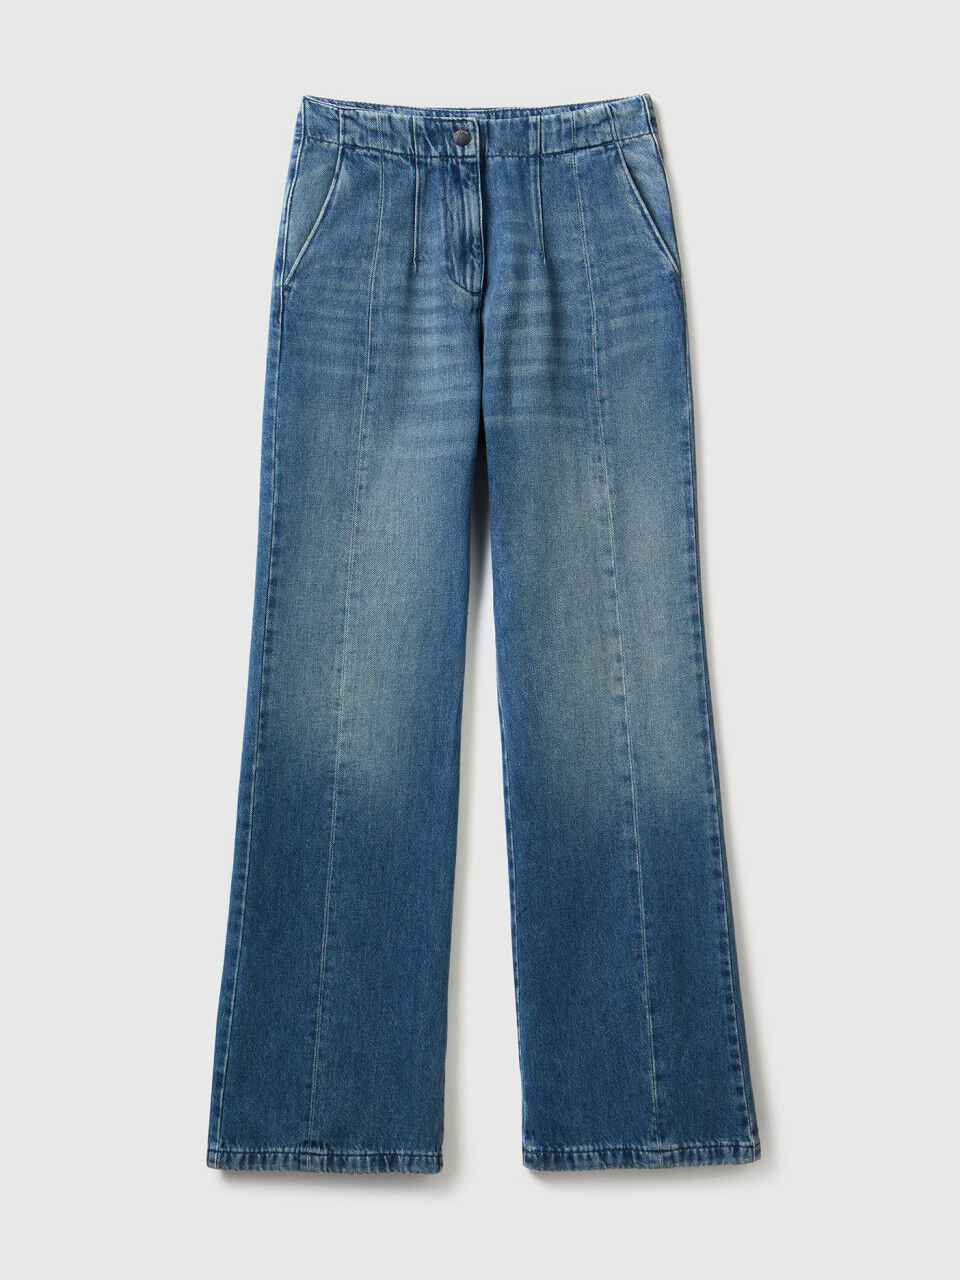 Amazon.com: New Women Diamond drilled Hole Jeans Woman Pencil Pants Women  Jeans Ripped Denim Trousers with Rhinestone Denim Pants Woman Blue 29 :  Sports & Outdoors